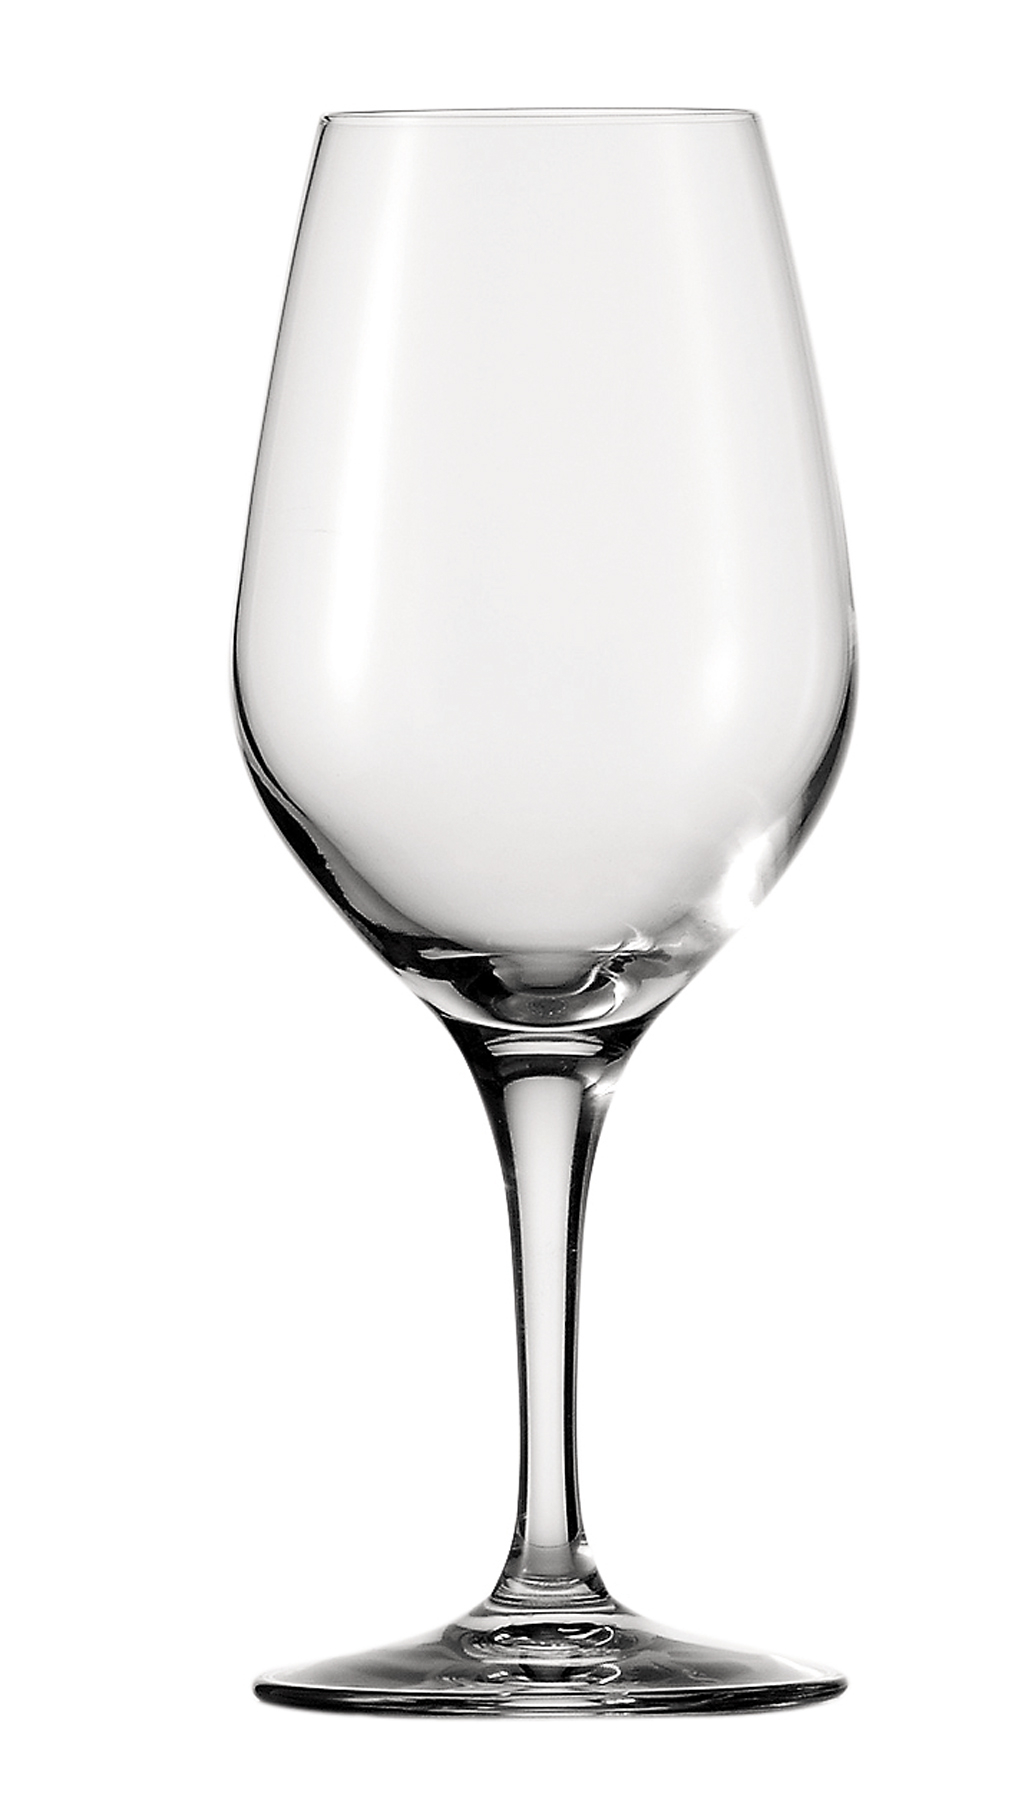 Profi Tasting Glas, Special Glasses, Spiegelau - 260ml